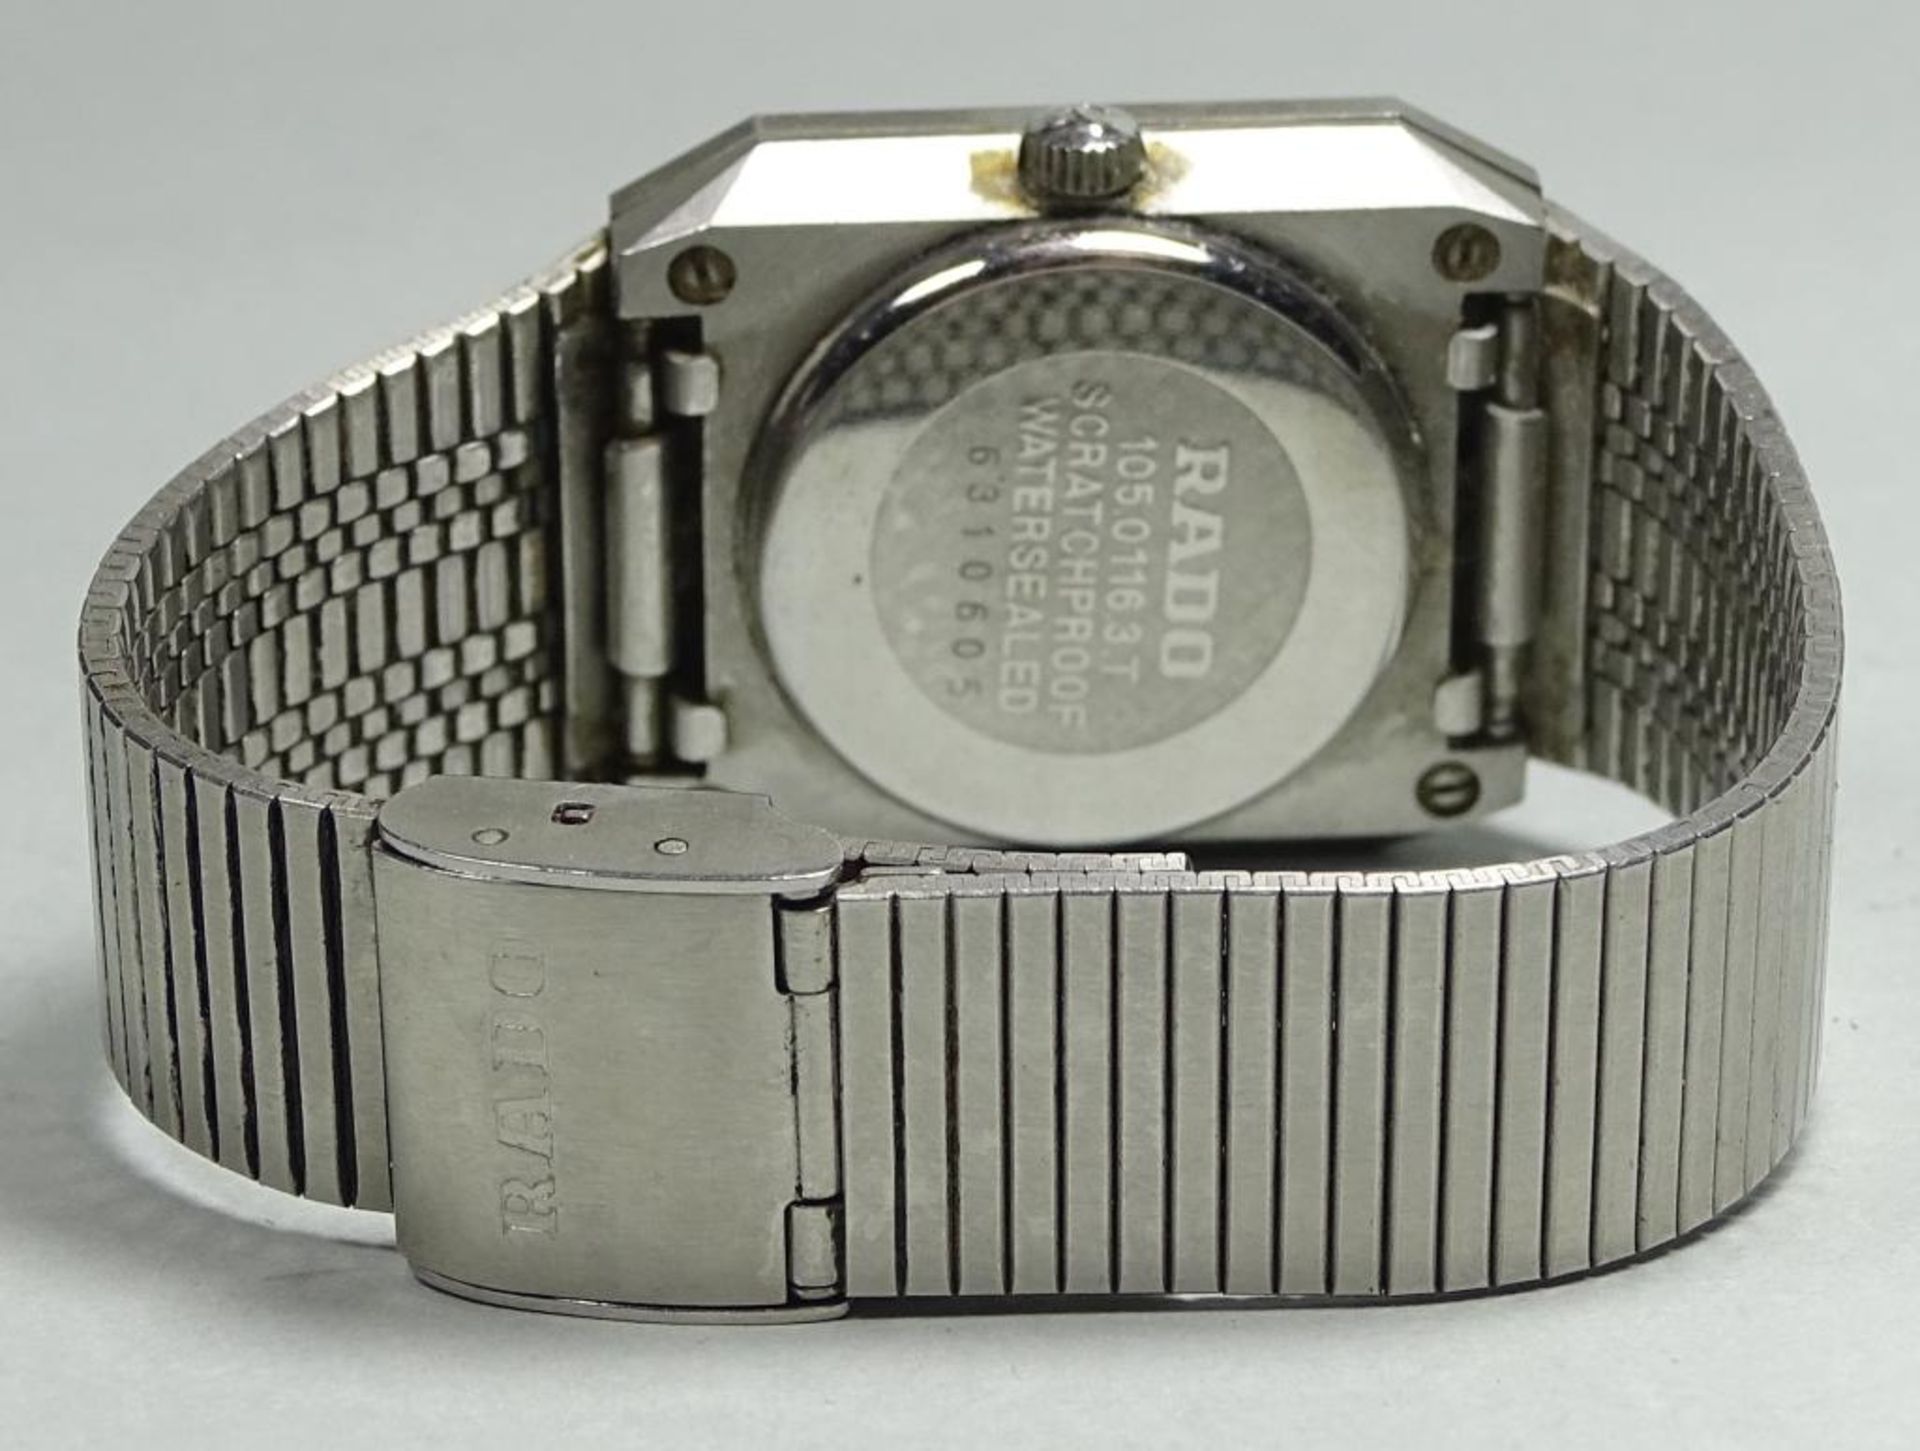 Armbanduhr "Rado-Diastar",Quartz,Saphirglas,Edelstahl,Gehäuse 31x29mm,Funktion nicht geteste - Bild 4 aus 6